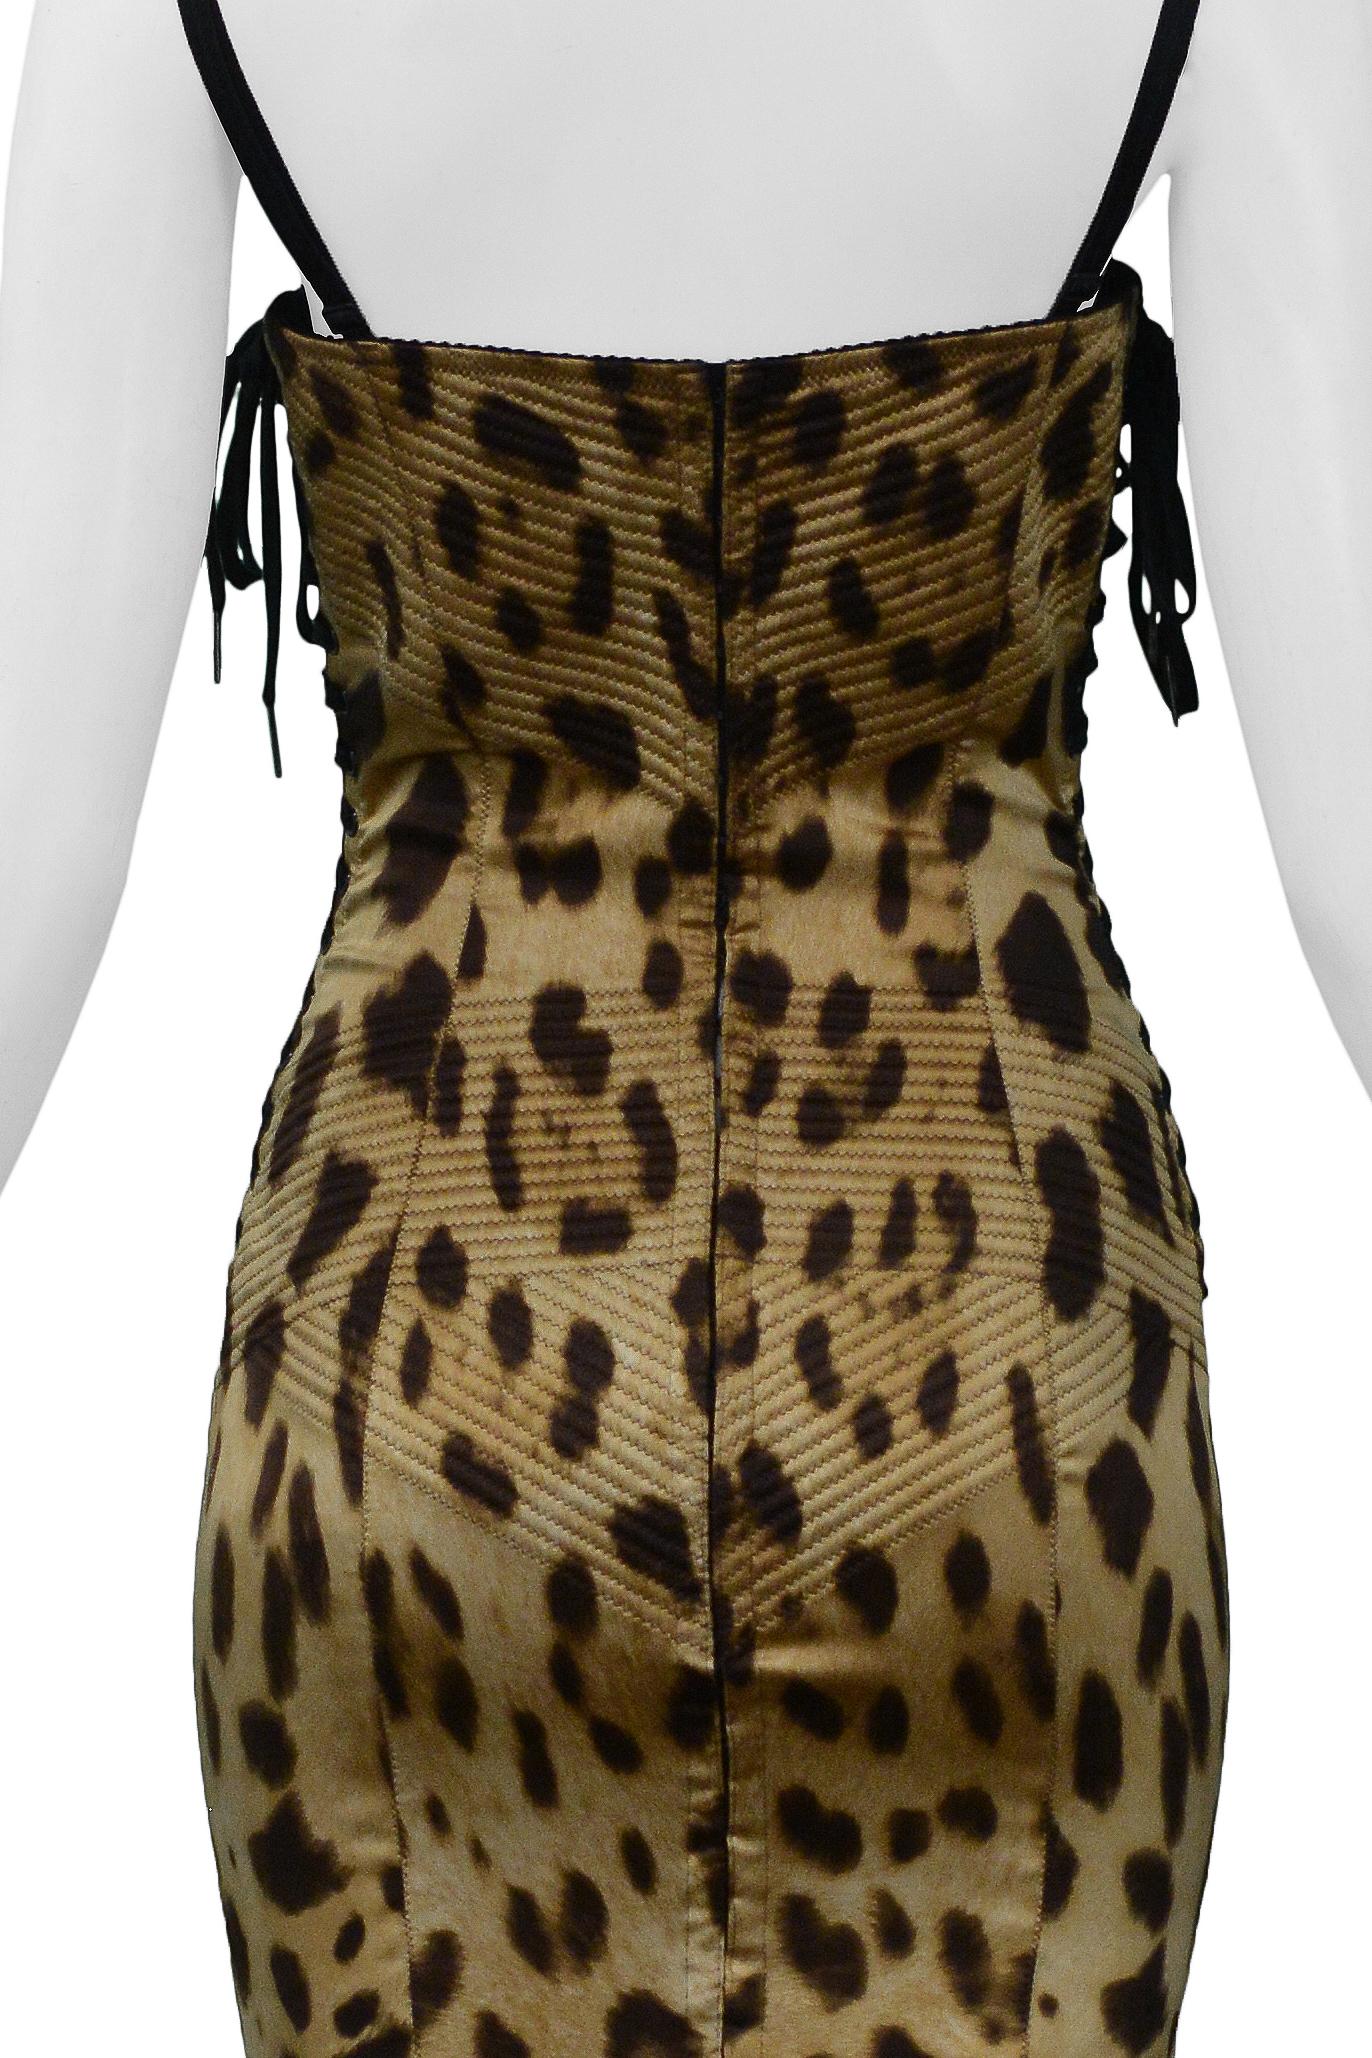 Dolce & Gabbana Satin Leopard Print Corset Bustier Dress For Sale 1